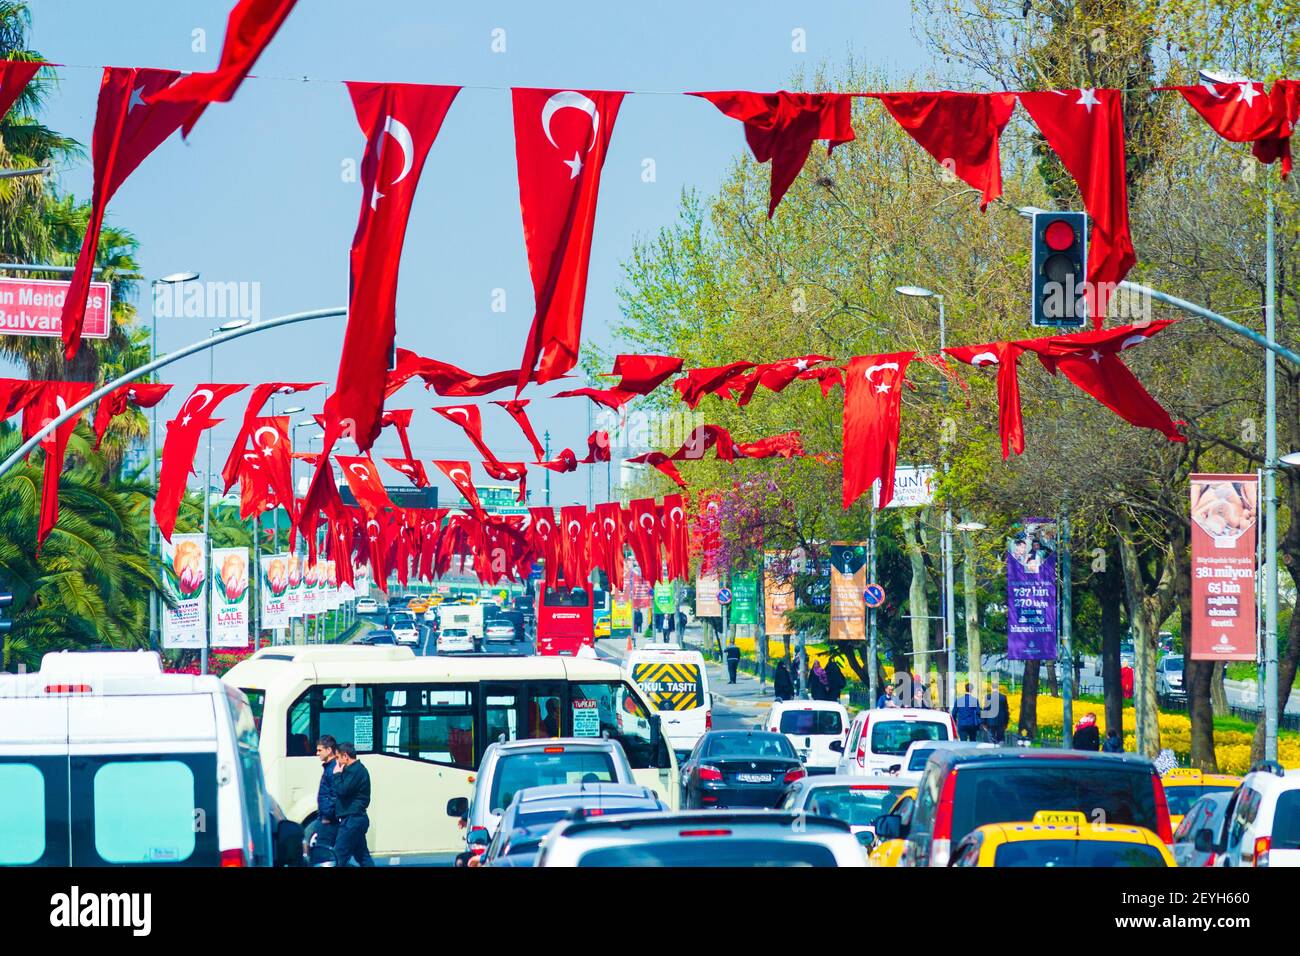 Ataturk Boulevard and city traffic in Istanbul, Turkey. Stock Photo